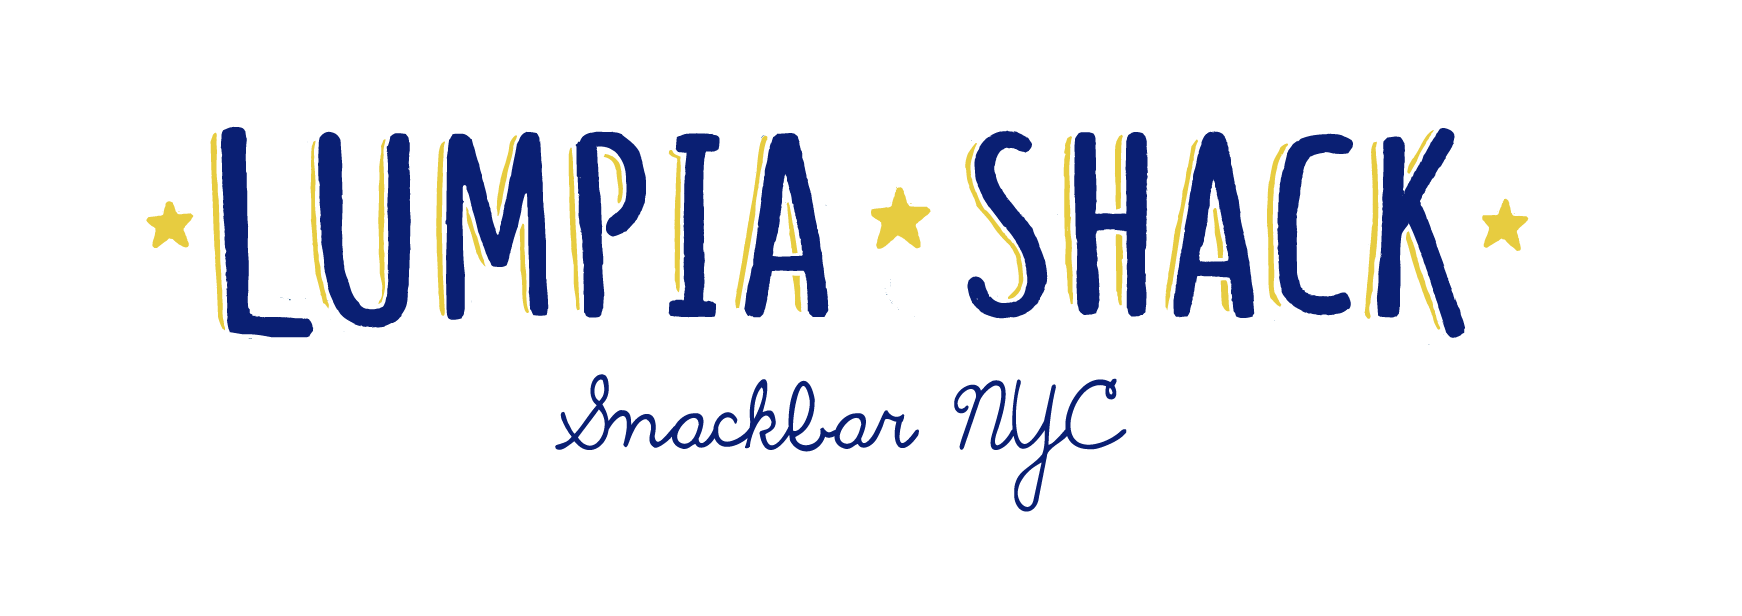 Lumpia Shack logo.png